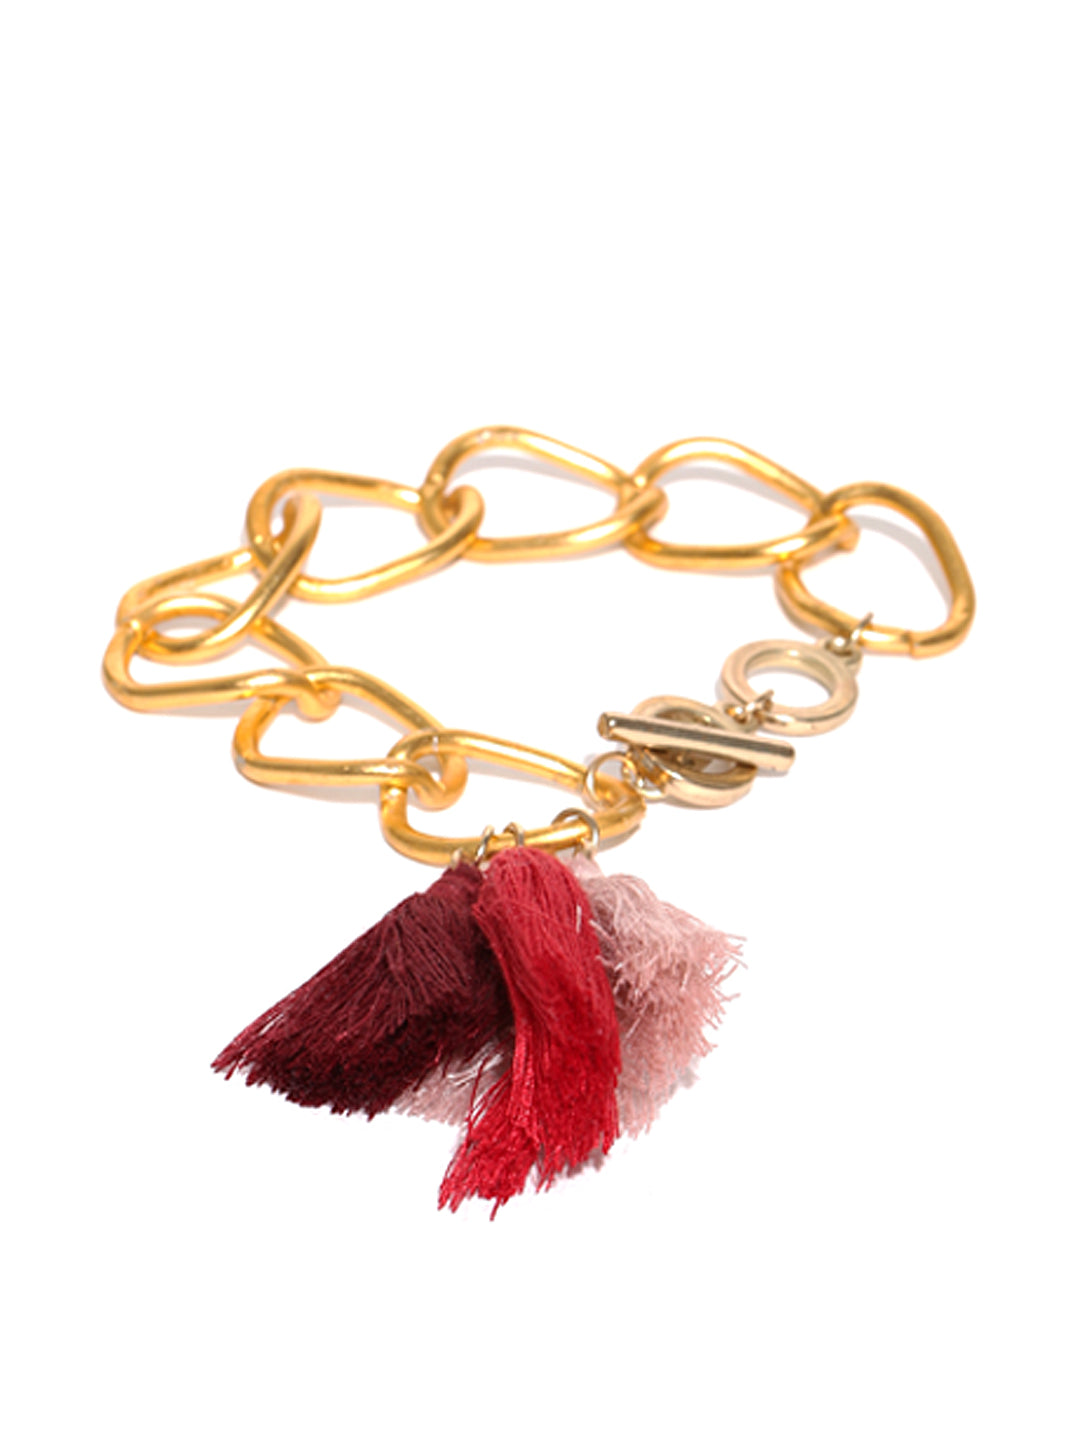 Gold toned multi tassel choker necklace with bracelet